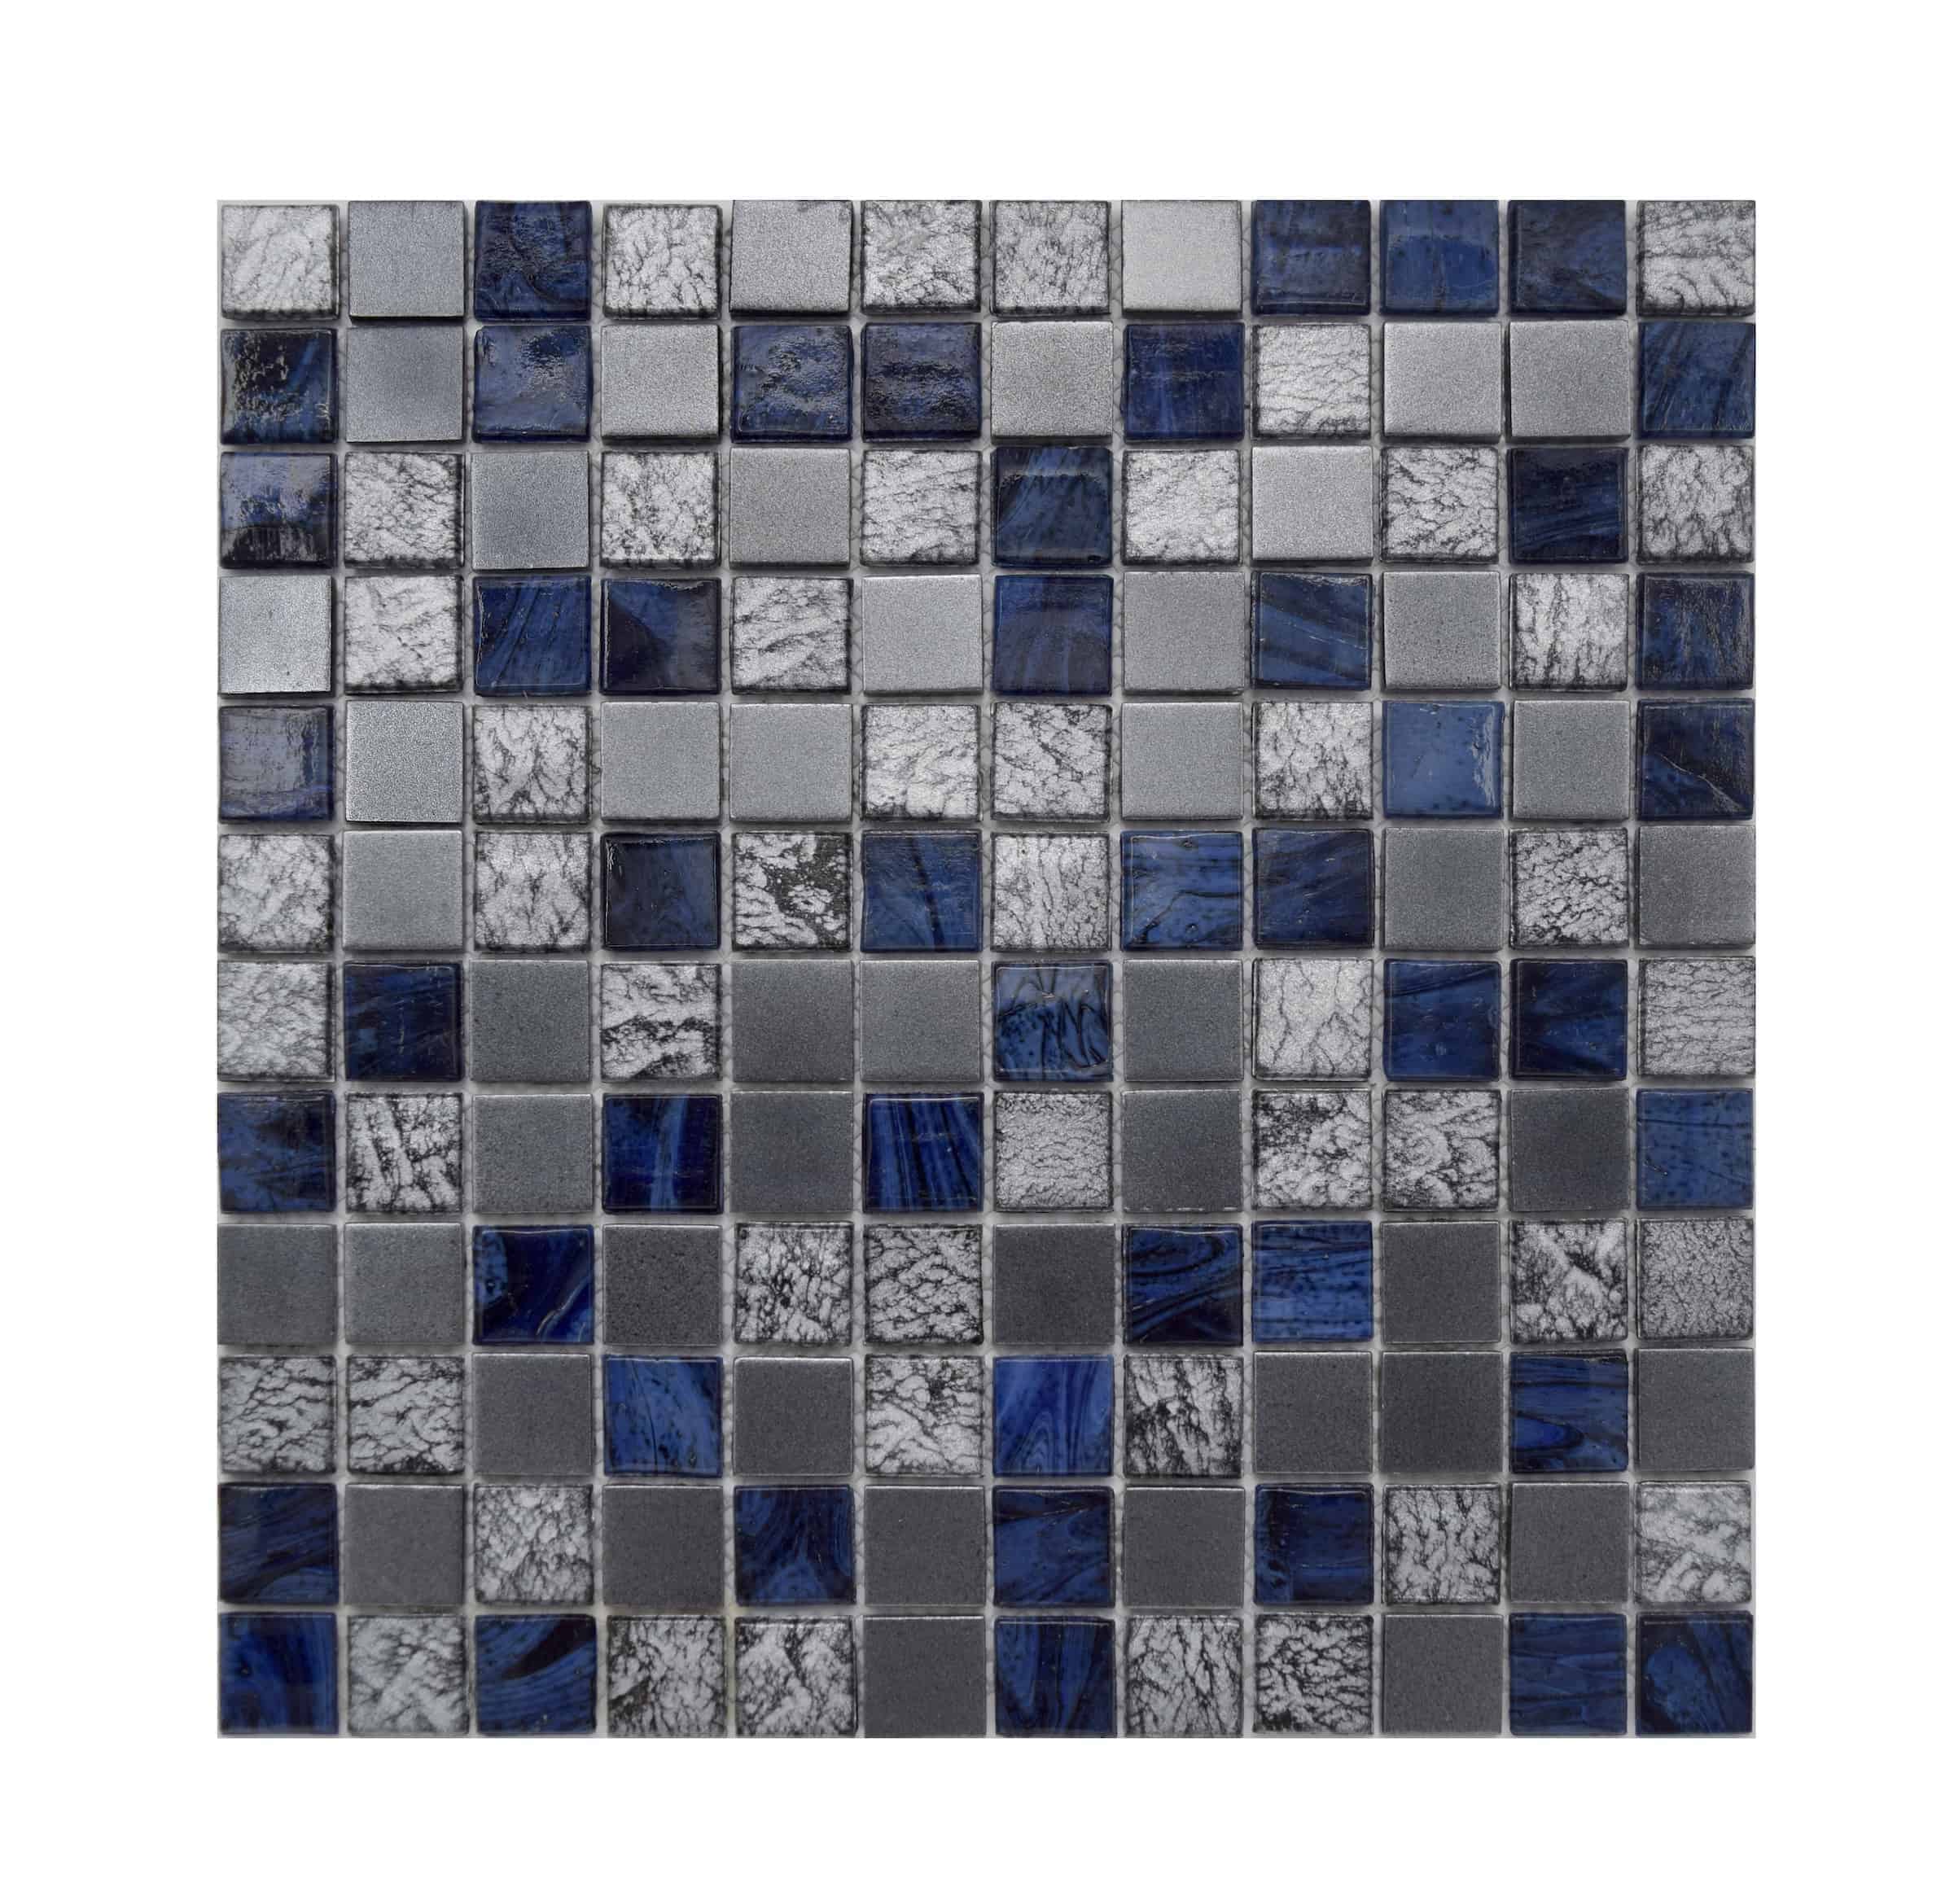 1 SQM Black & Clear Crackled Glass & Stone Bathroom Kitchen Mosaic Tile GTR10152 